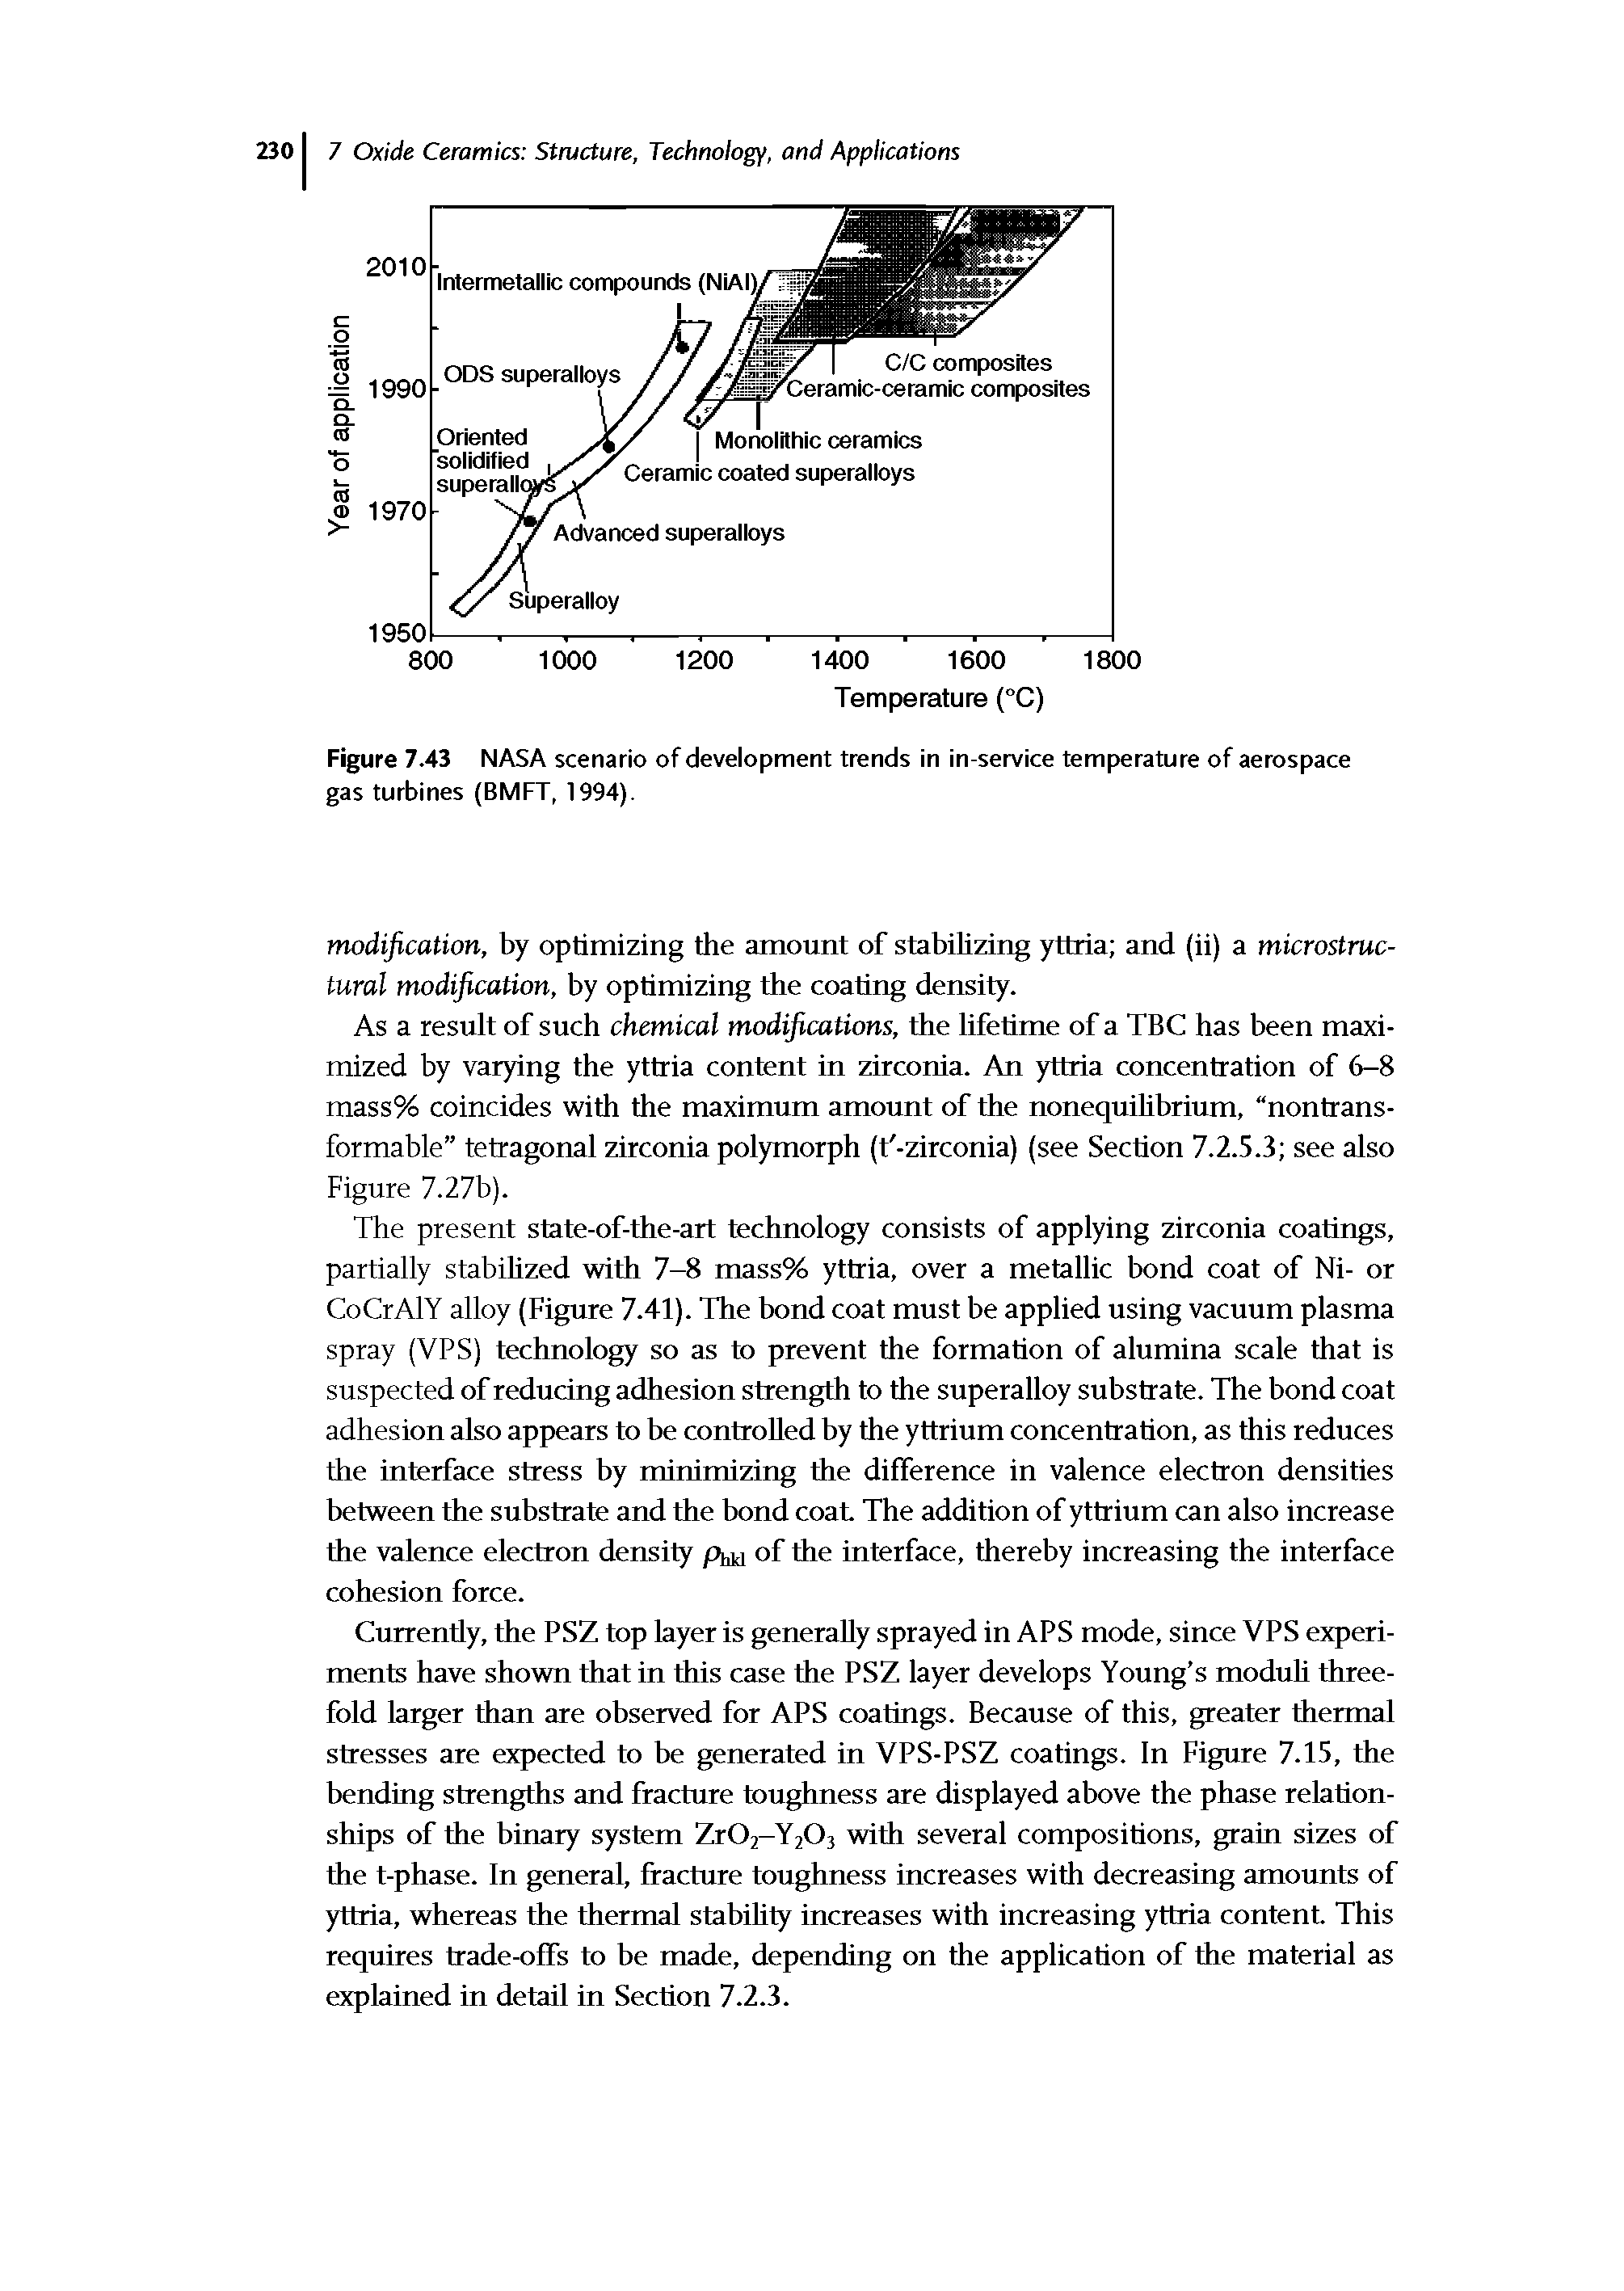 Figure 7.43 NASA scenario of development trends in in-service temperature of aerospace gas turbines (BMFT, 1994).